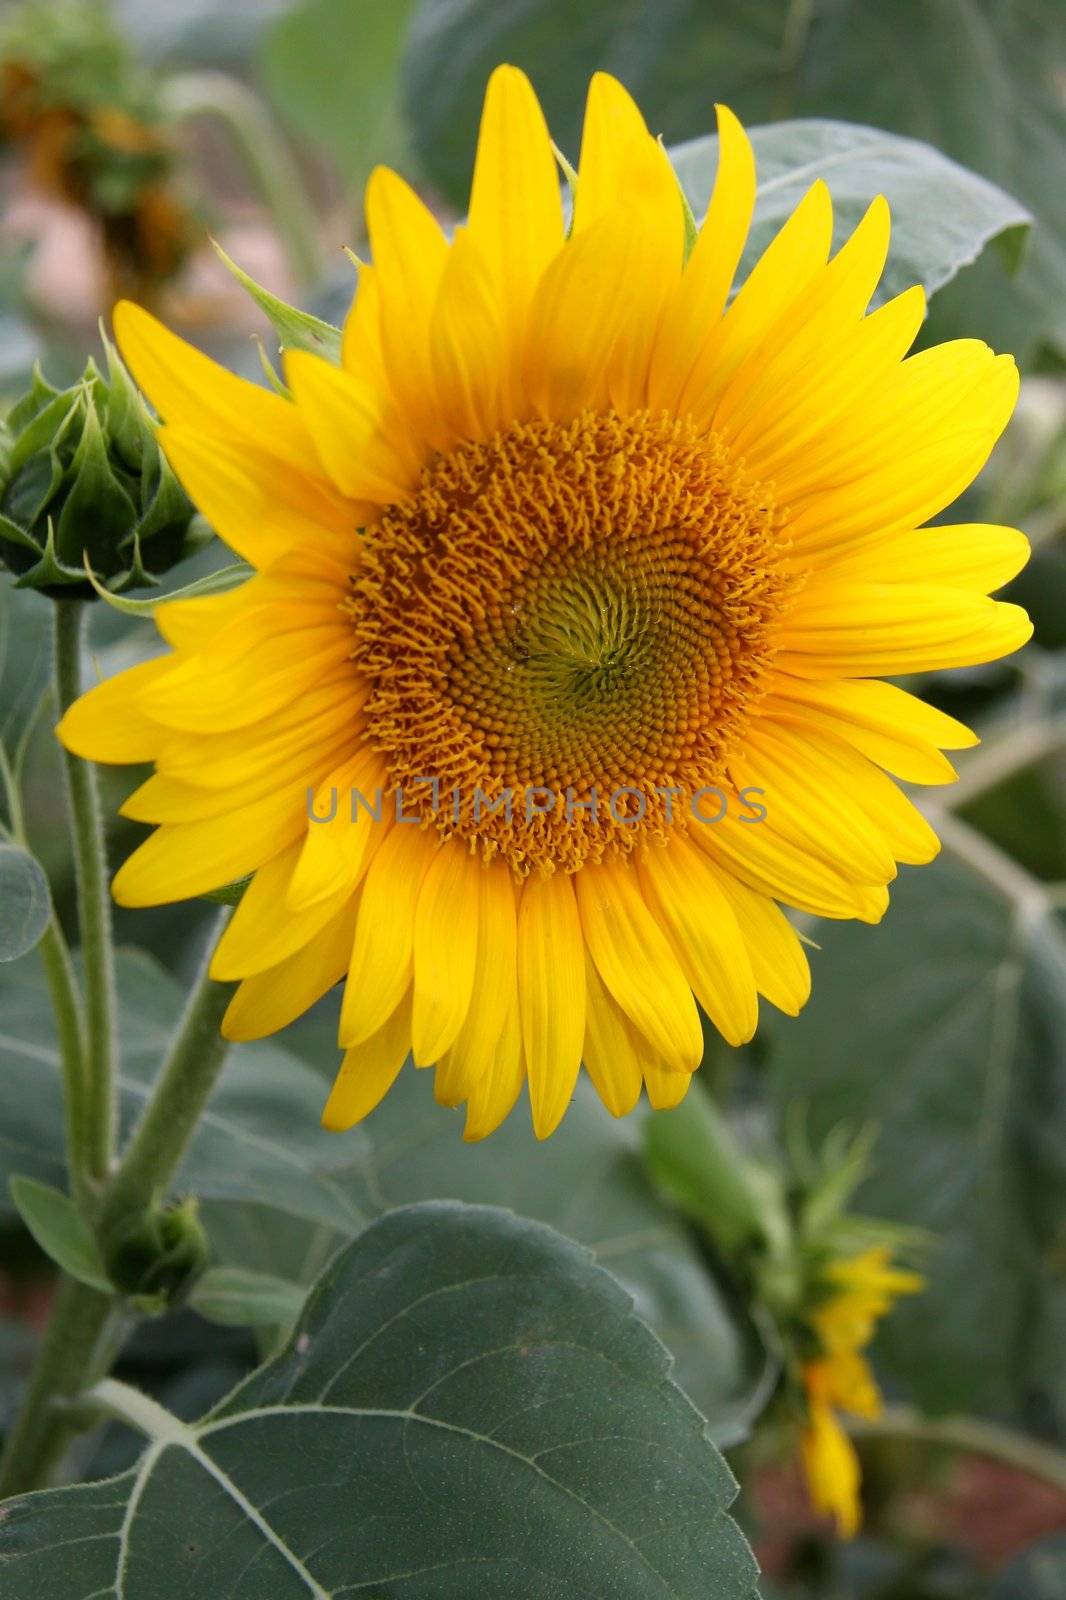 Sunflower by fouroaks